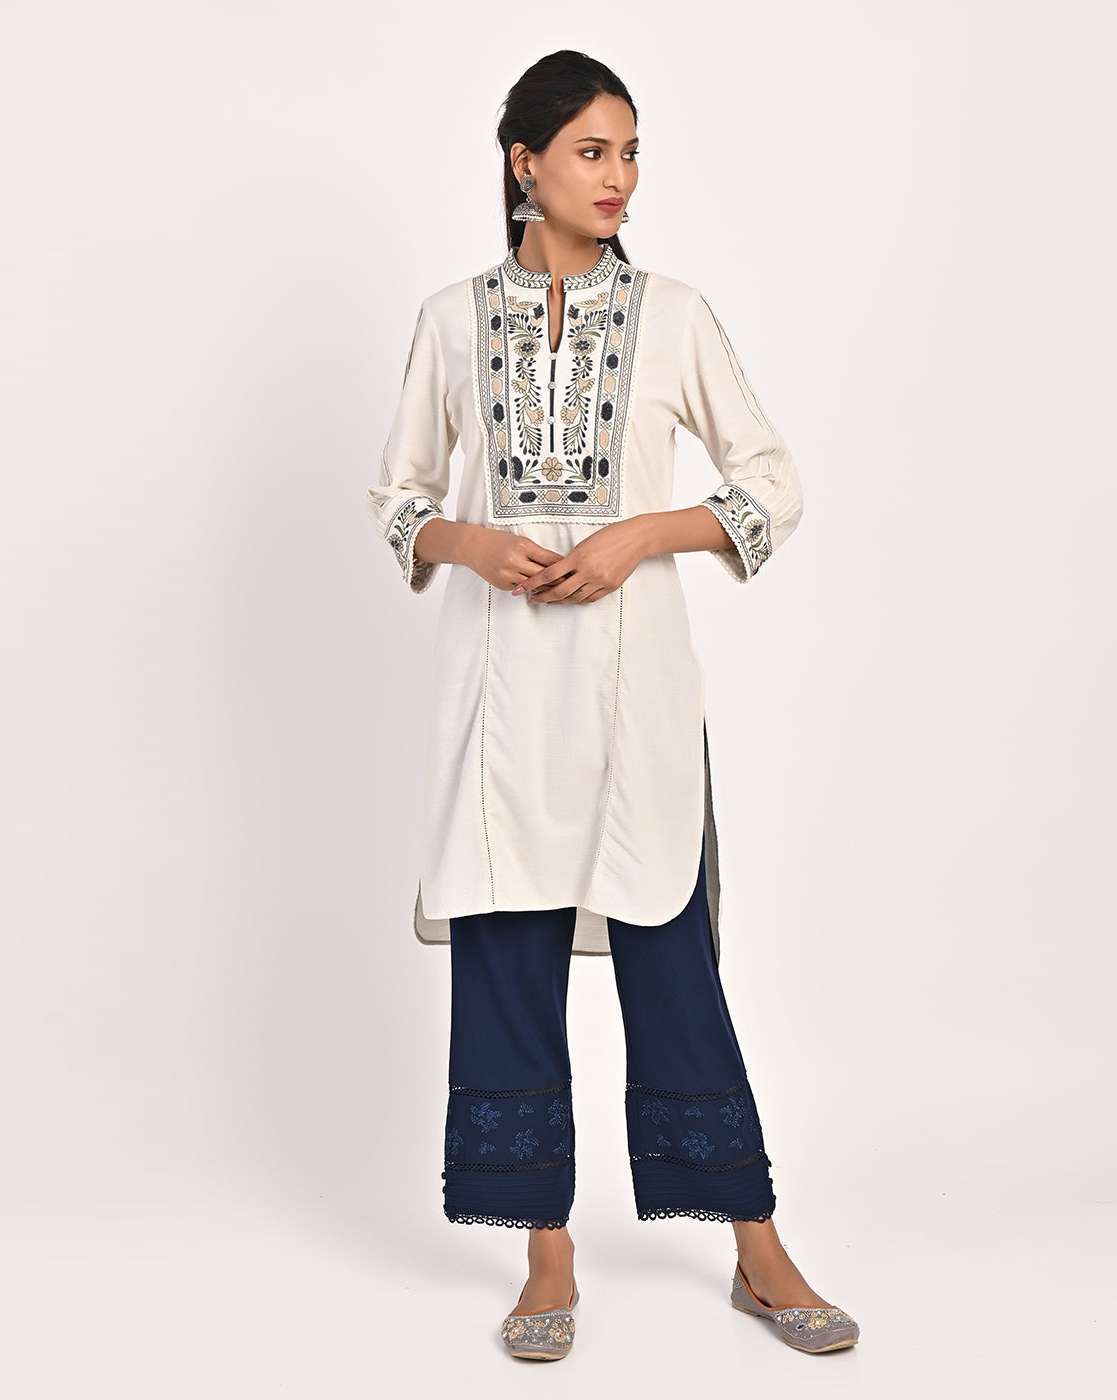 Designer Slub Rayon Fully Stitched Anarklai Kurti/Kurta for Women & Girls  on Jeans Palazzo or Skirt